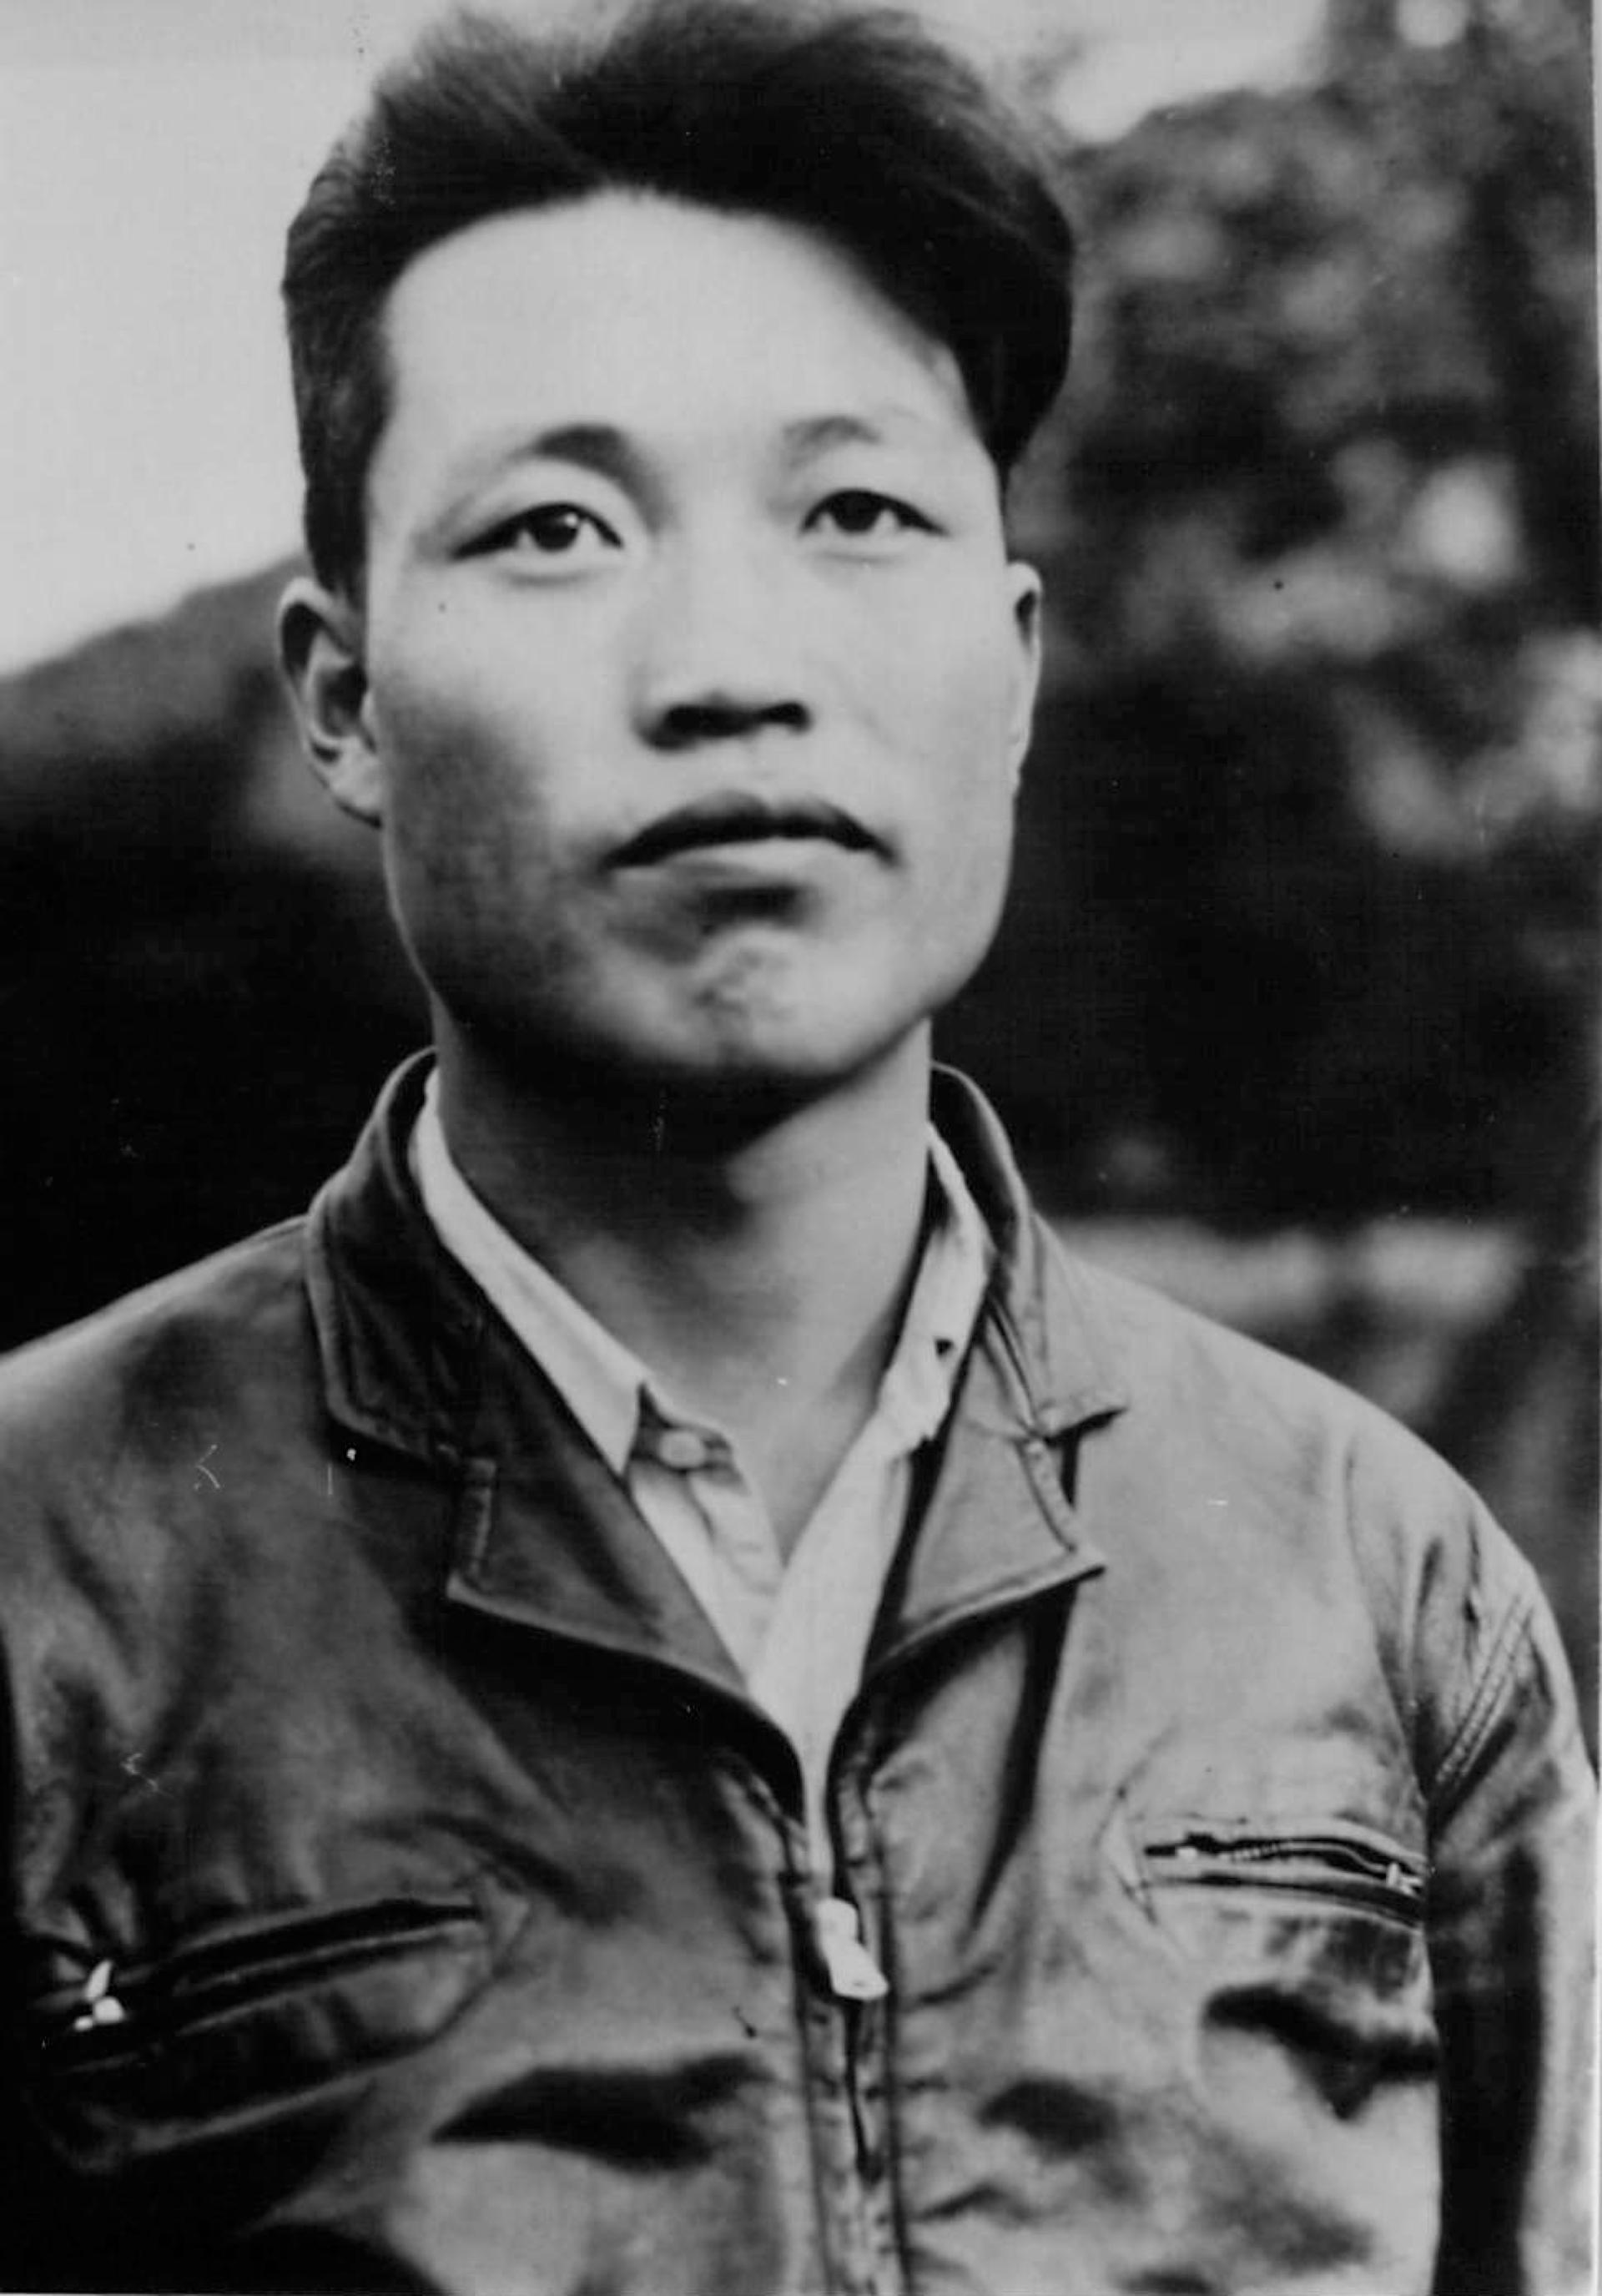 Senior Lieutenant No Kum Sok was 21 when landed a North Korean MiG-15 at Kimpo Air Force Base in South Korea on September 21, 1953.